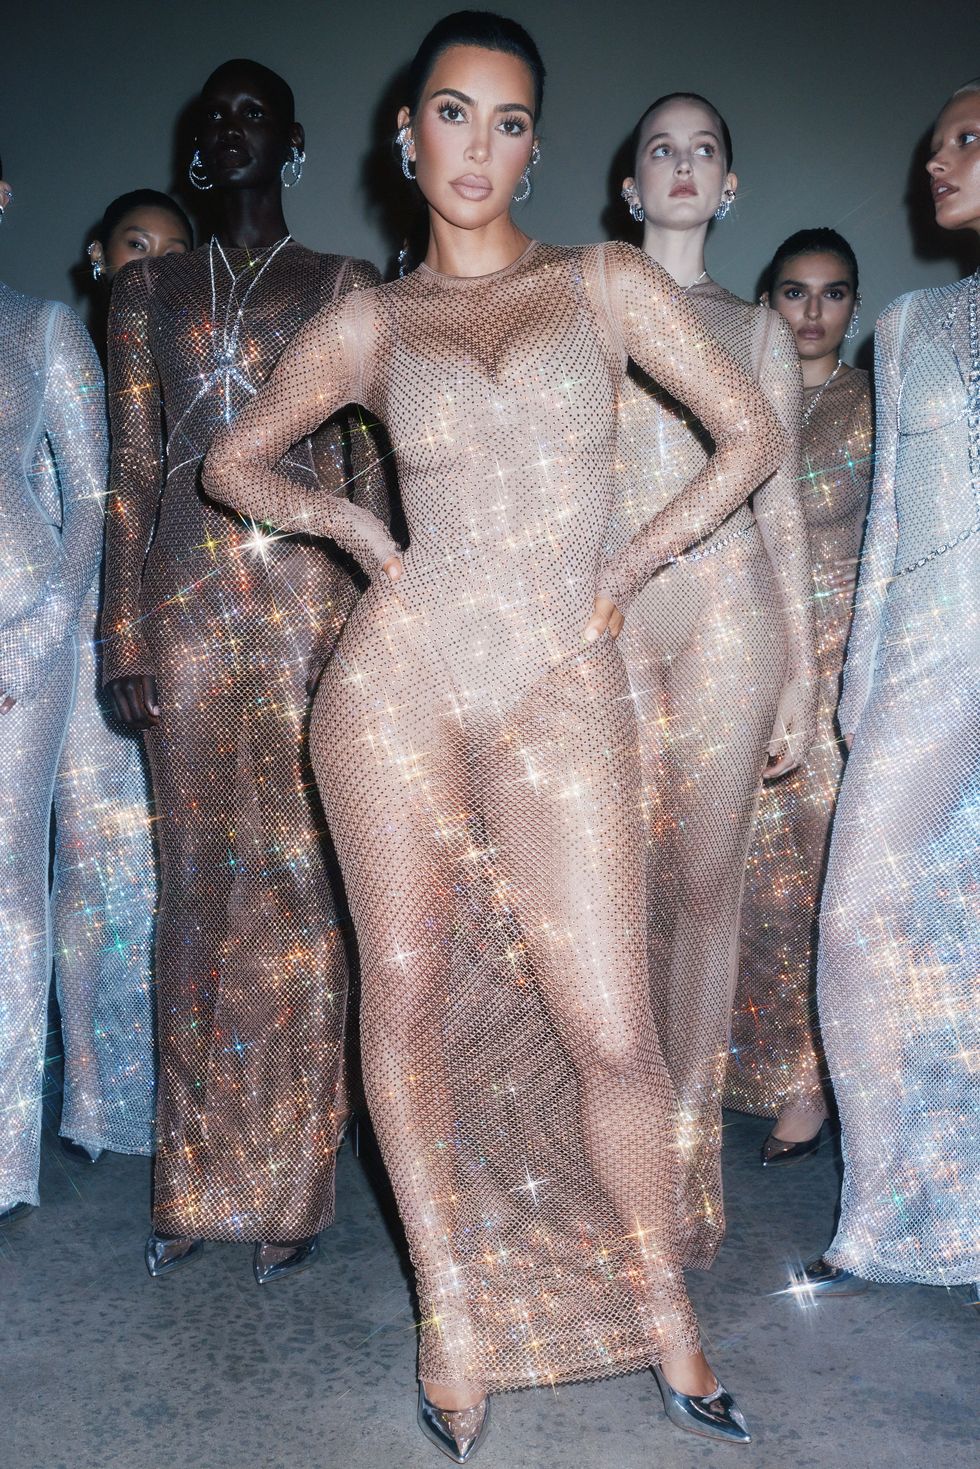 Kim Kardashian Covers Herself in Crystals for Swarovski X SKIMS